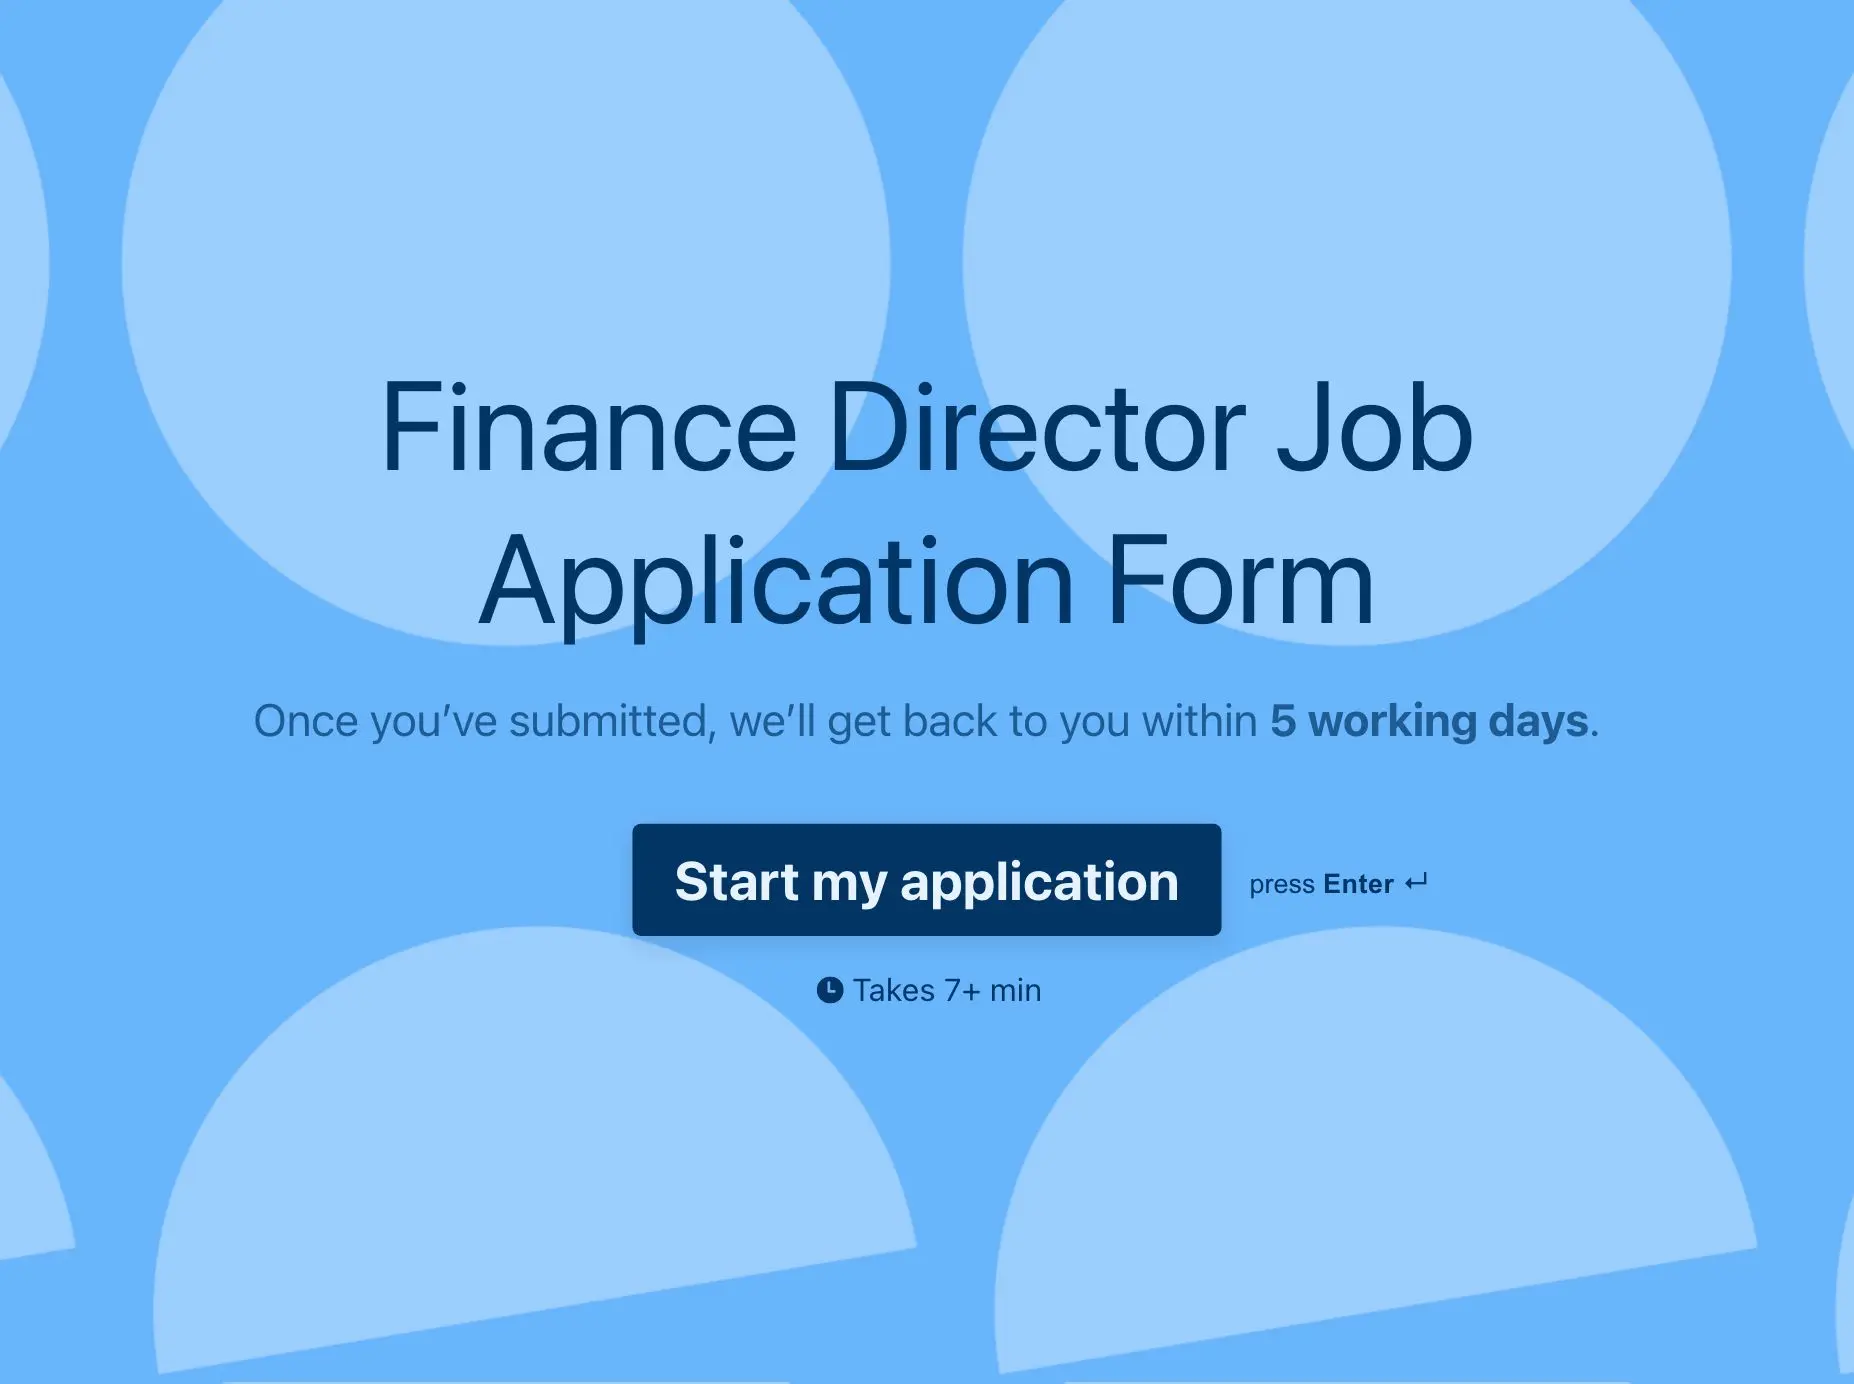 Finance Director Job Application Form Template Hero